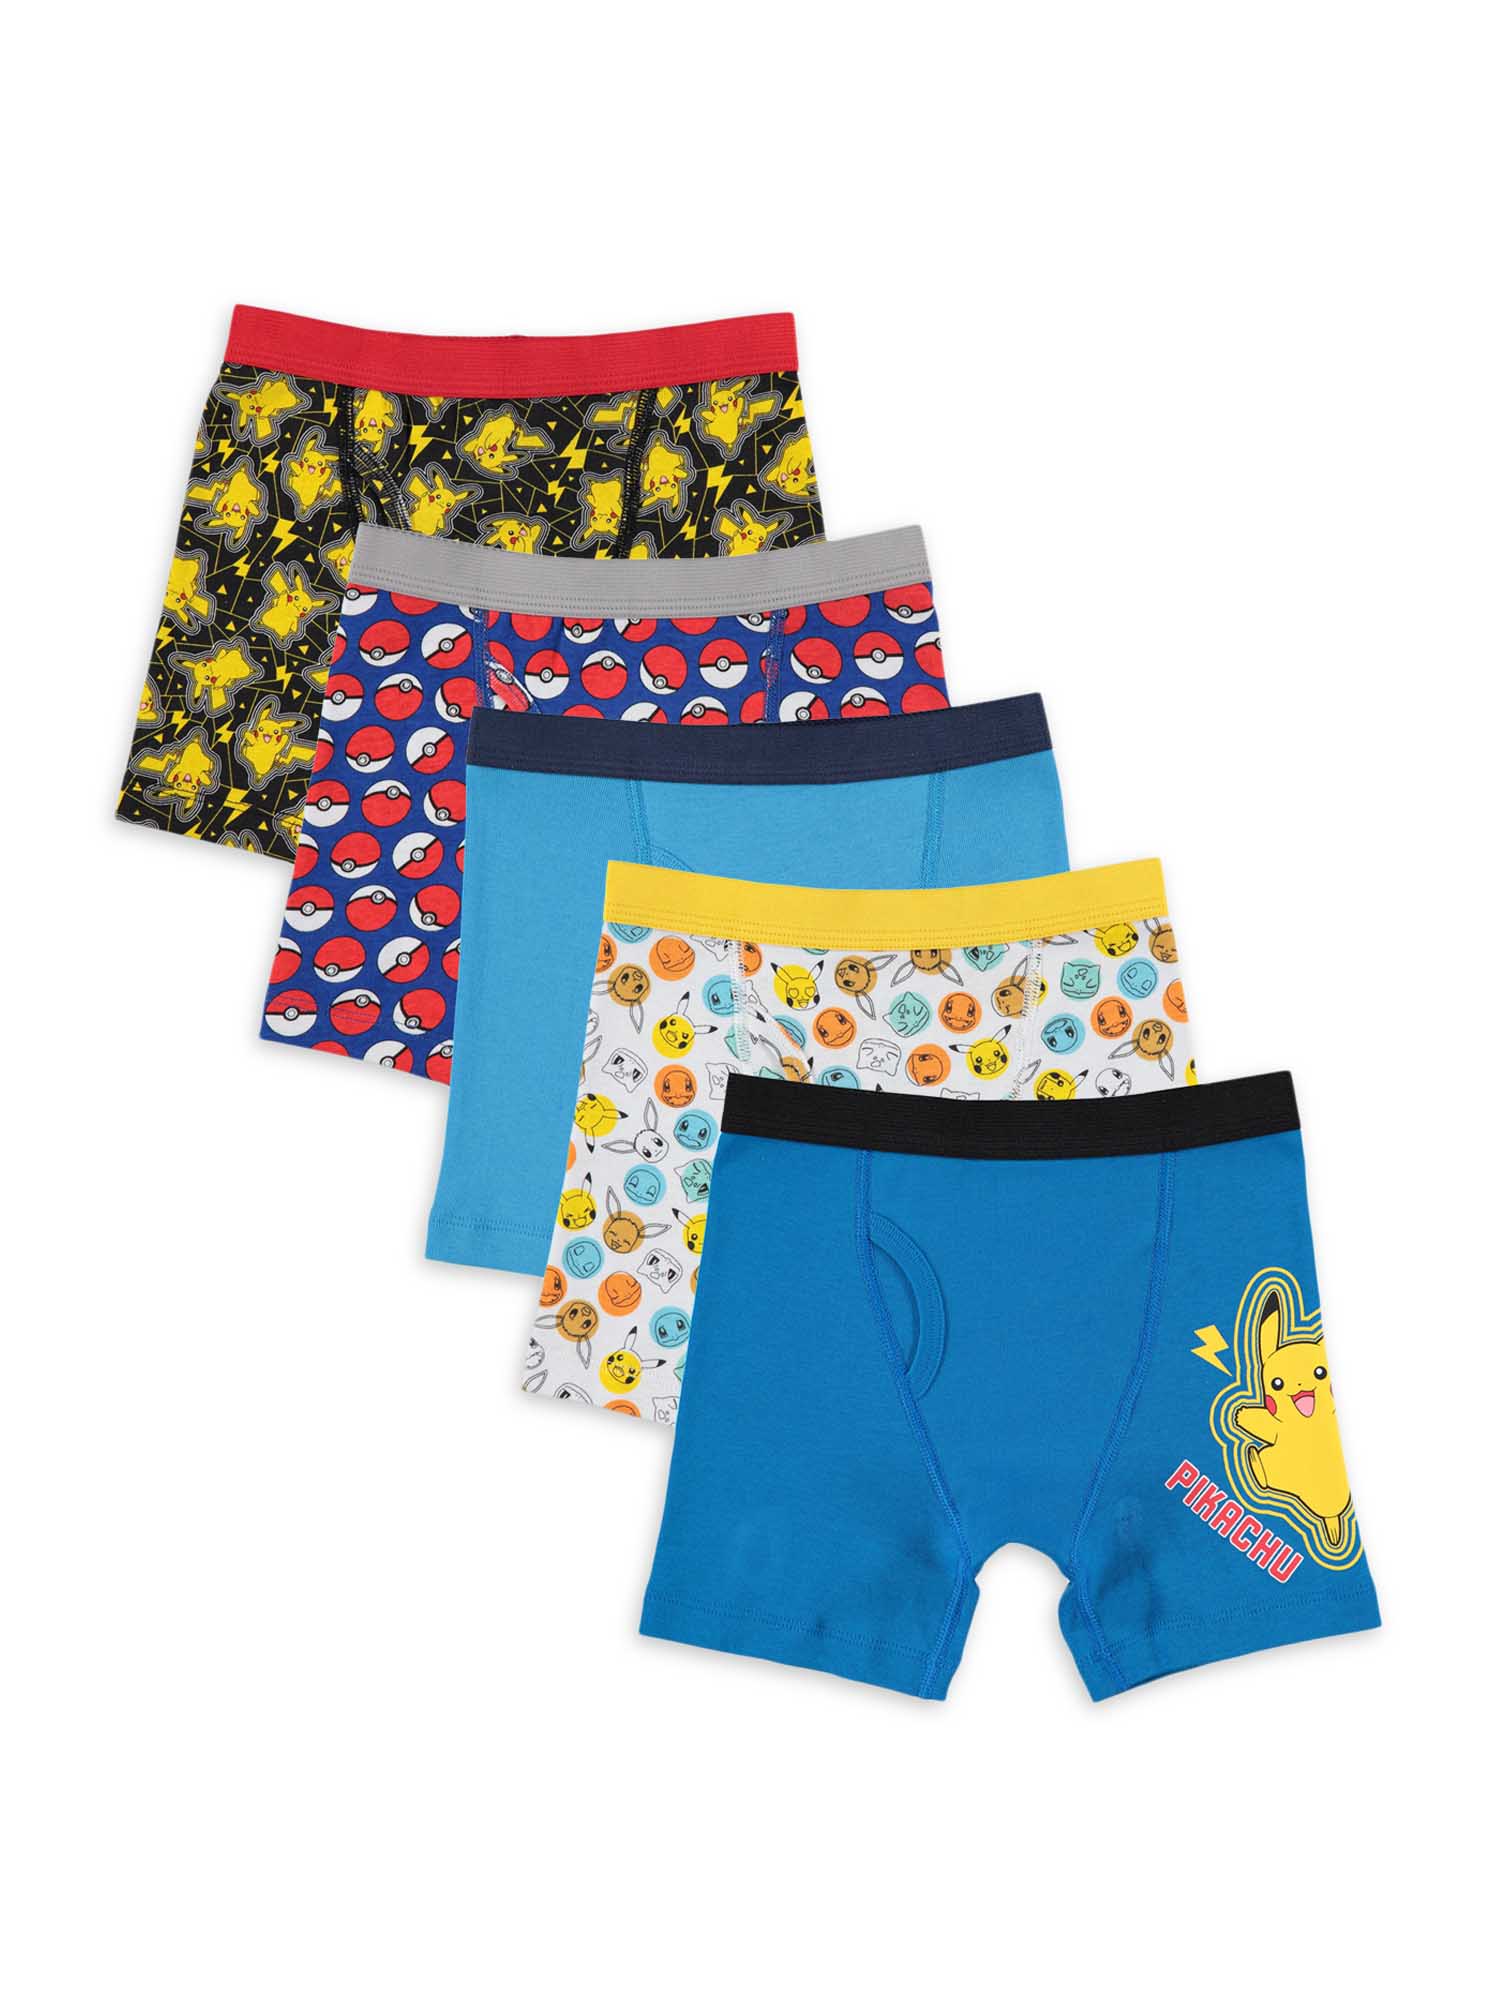 Pokemon Boys Underwear, 5 Pack Boxer Briefs Sizes 4-8 - image 1 of 3